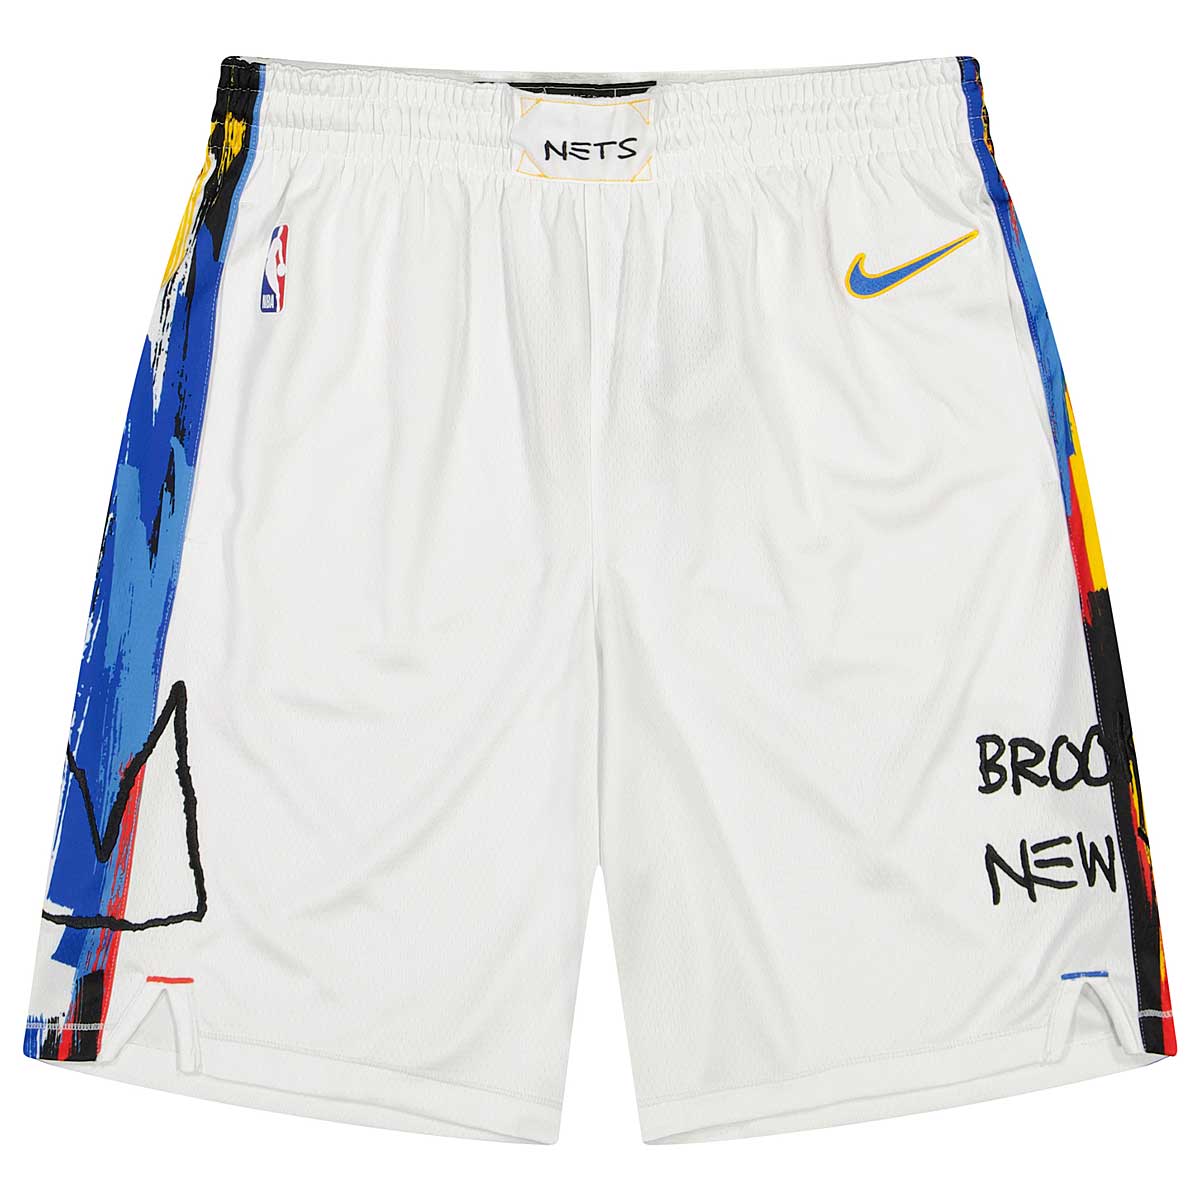 Nike Basketball Brooklyn Nets NBA Swingman shorts in white